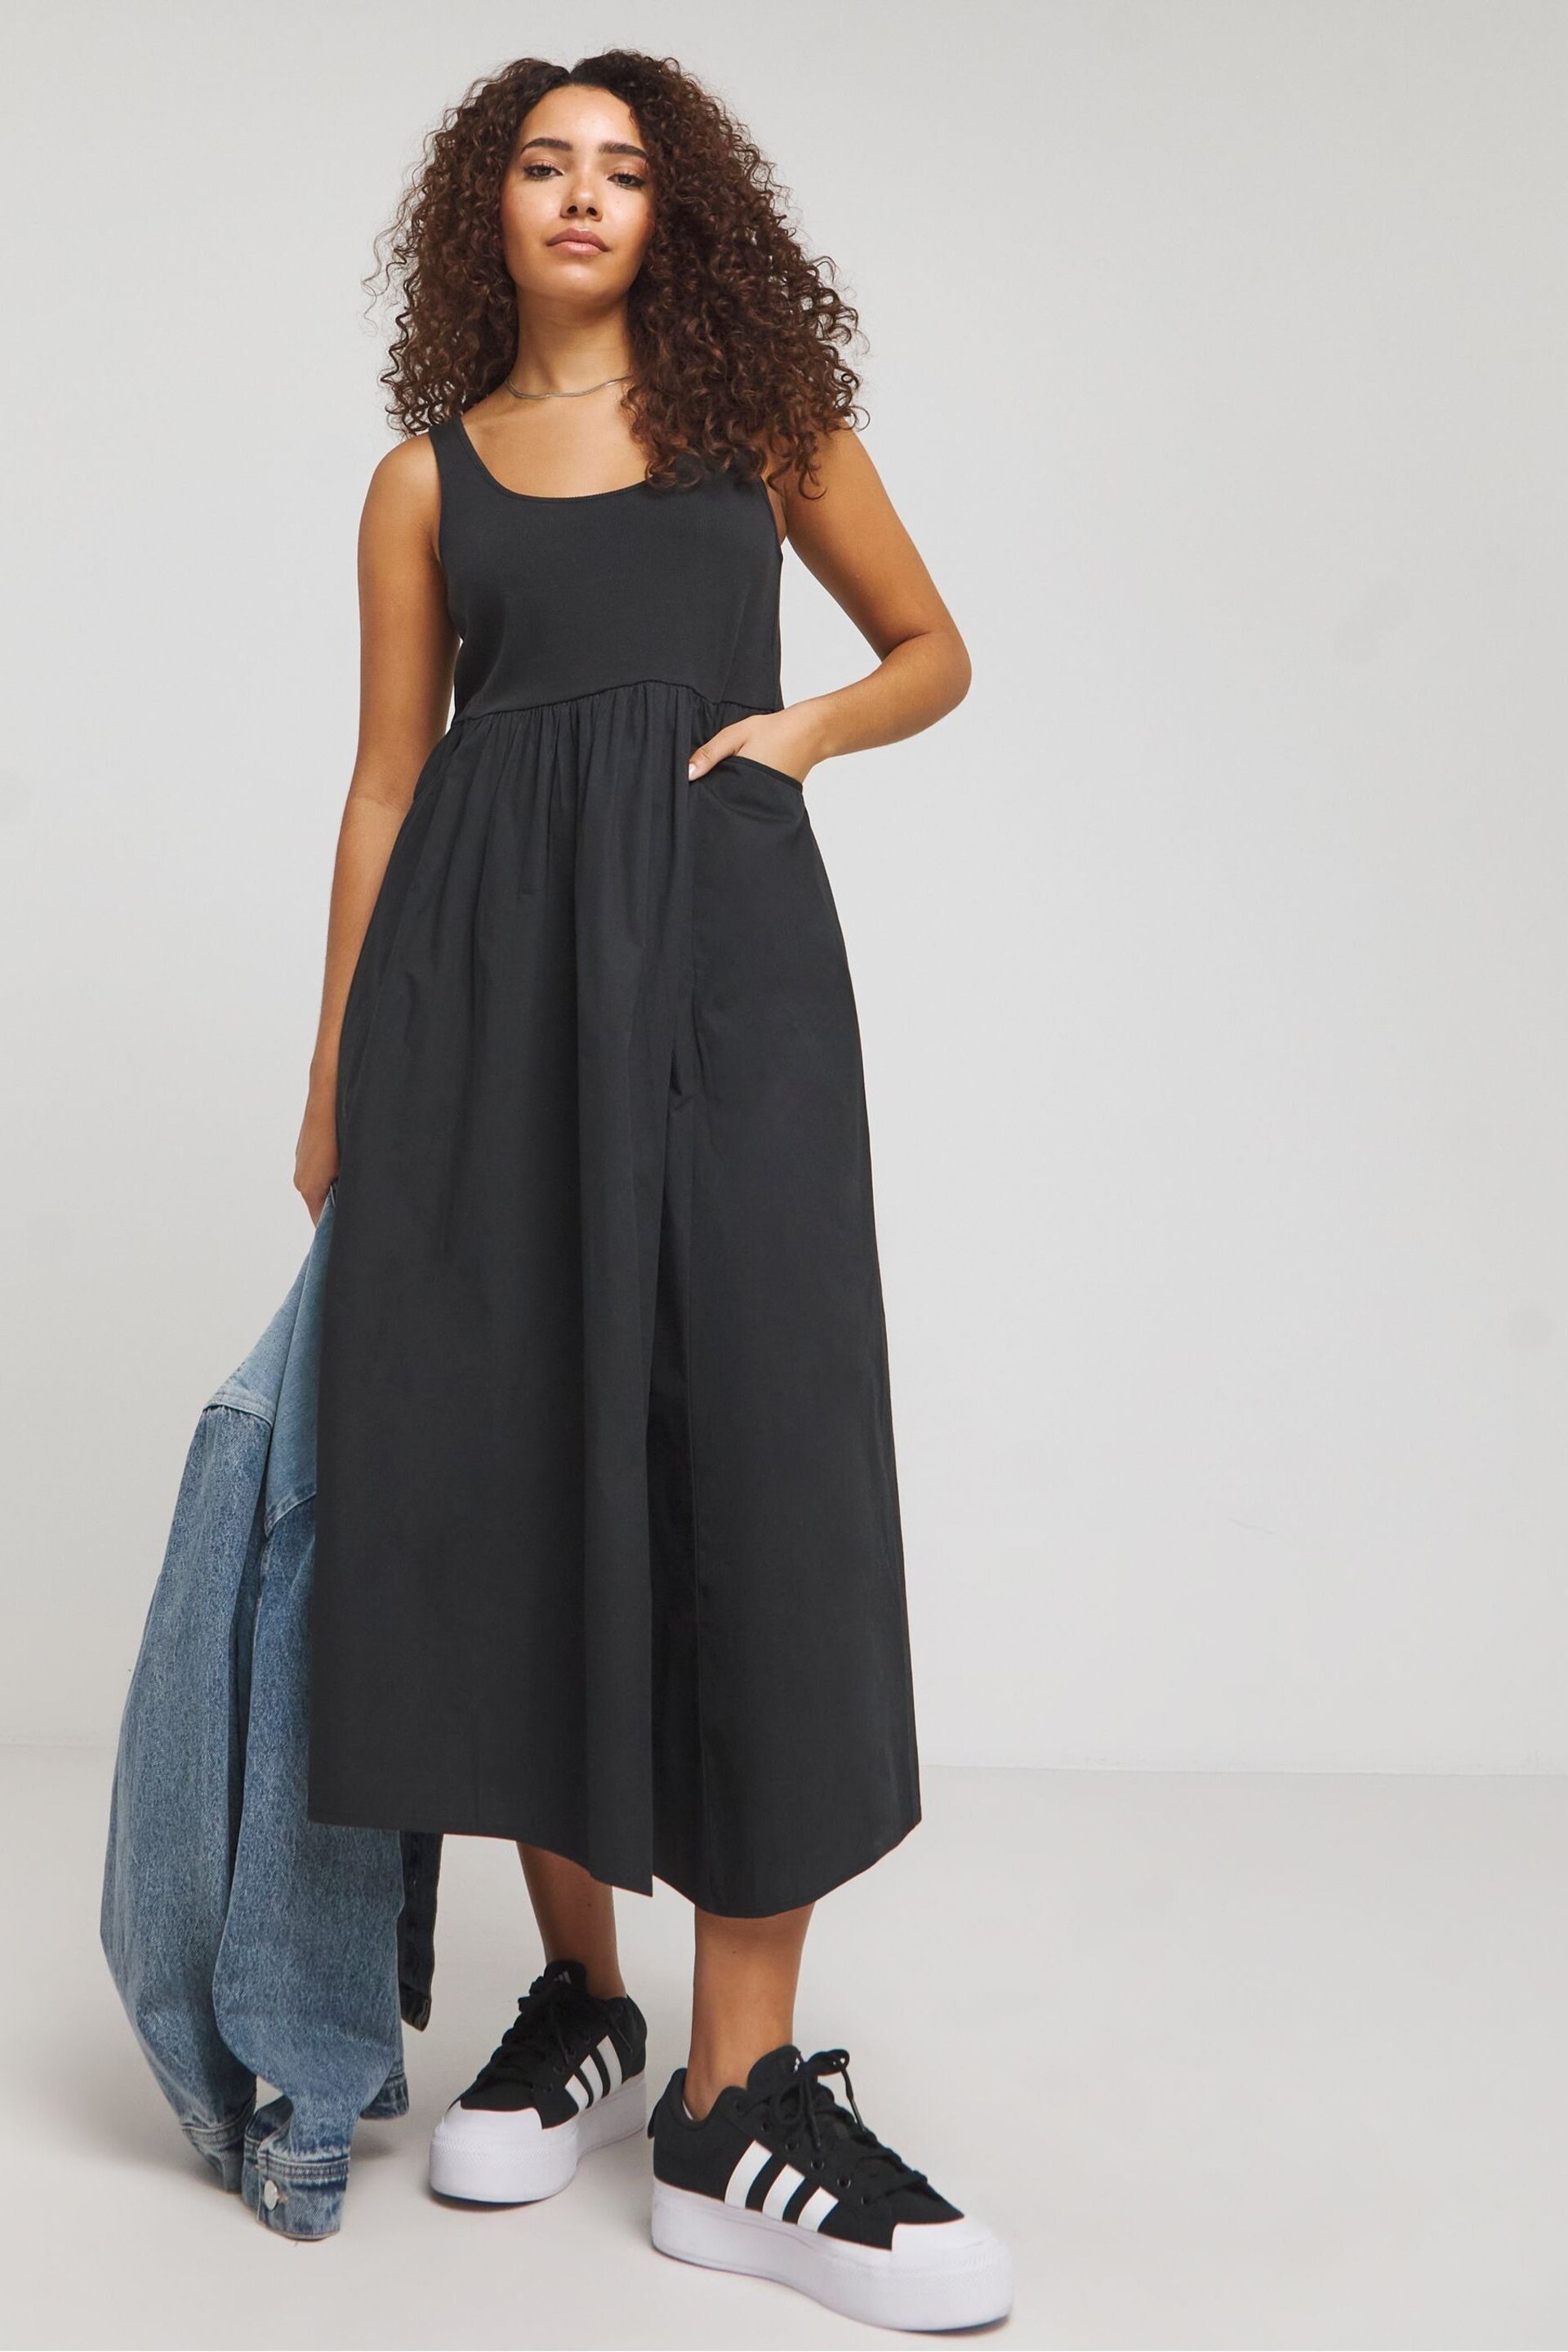 Simply Be Black Jersey Poplin Mix Apron Dress - Image 1 of 4